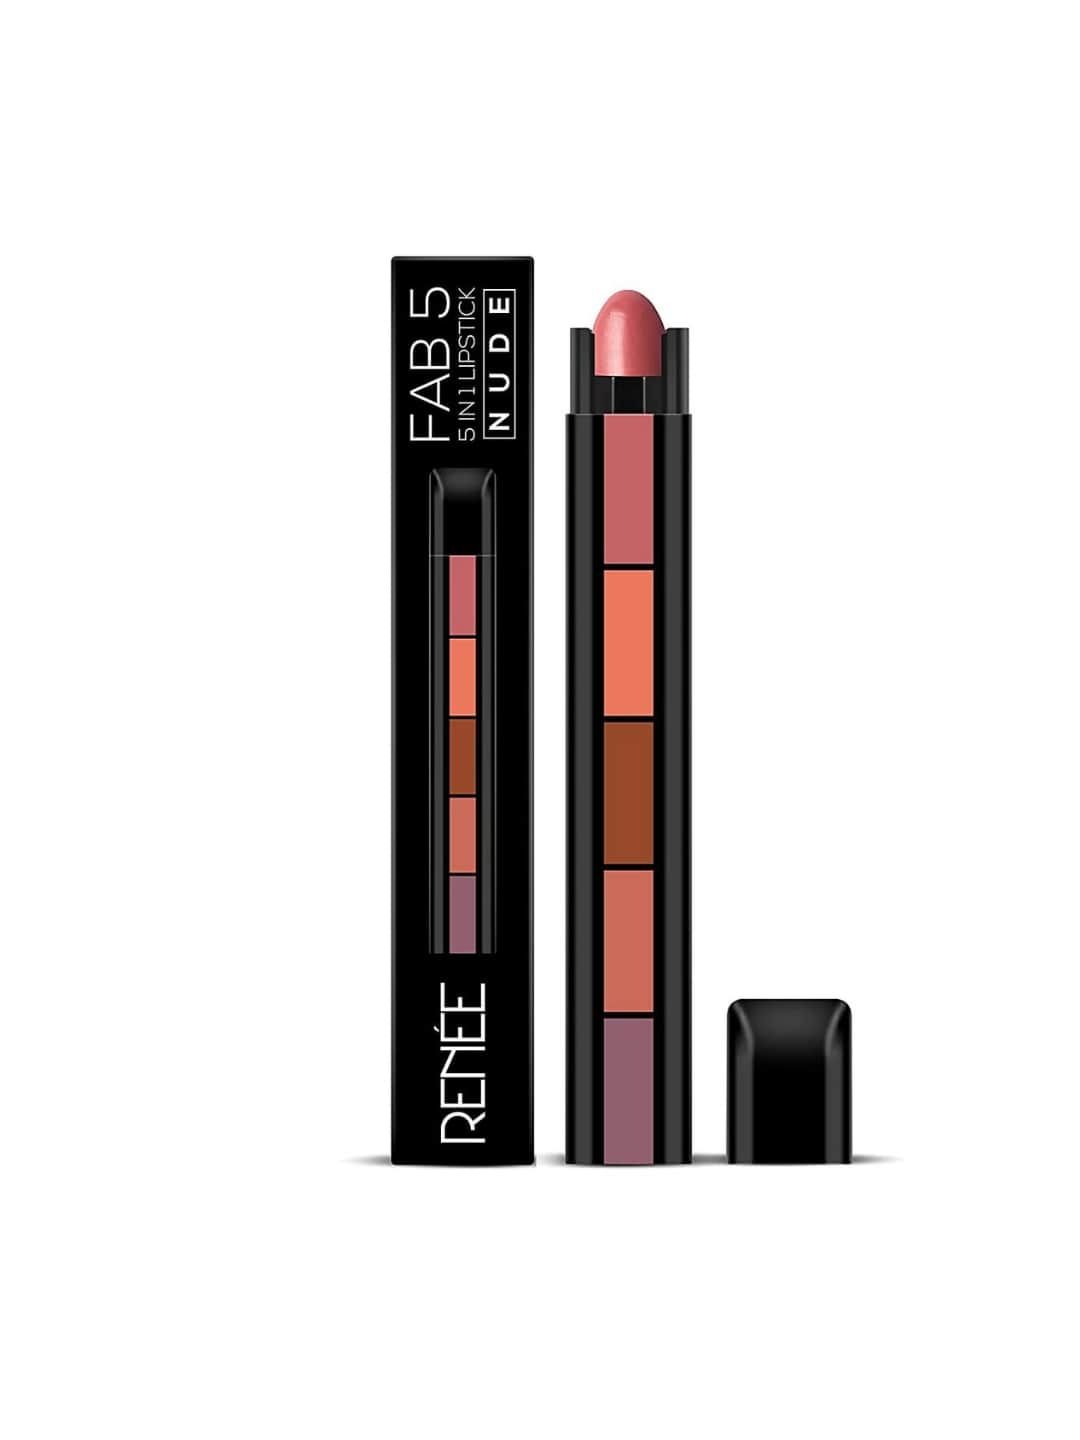 Renee Fab 5 Nude 5in1 Lipstick 7.5g Price in India